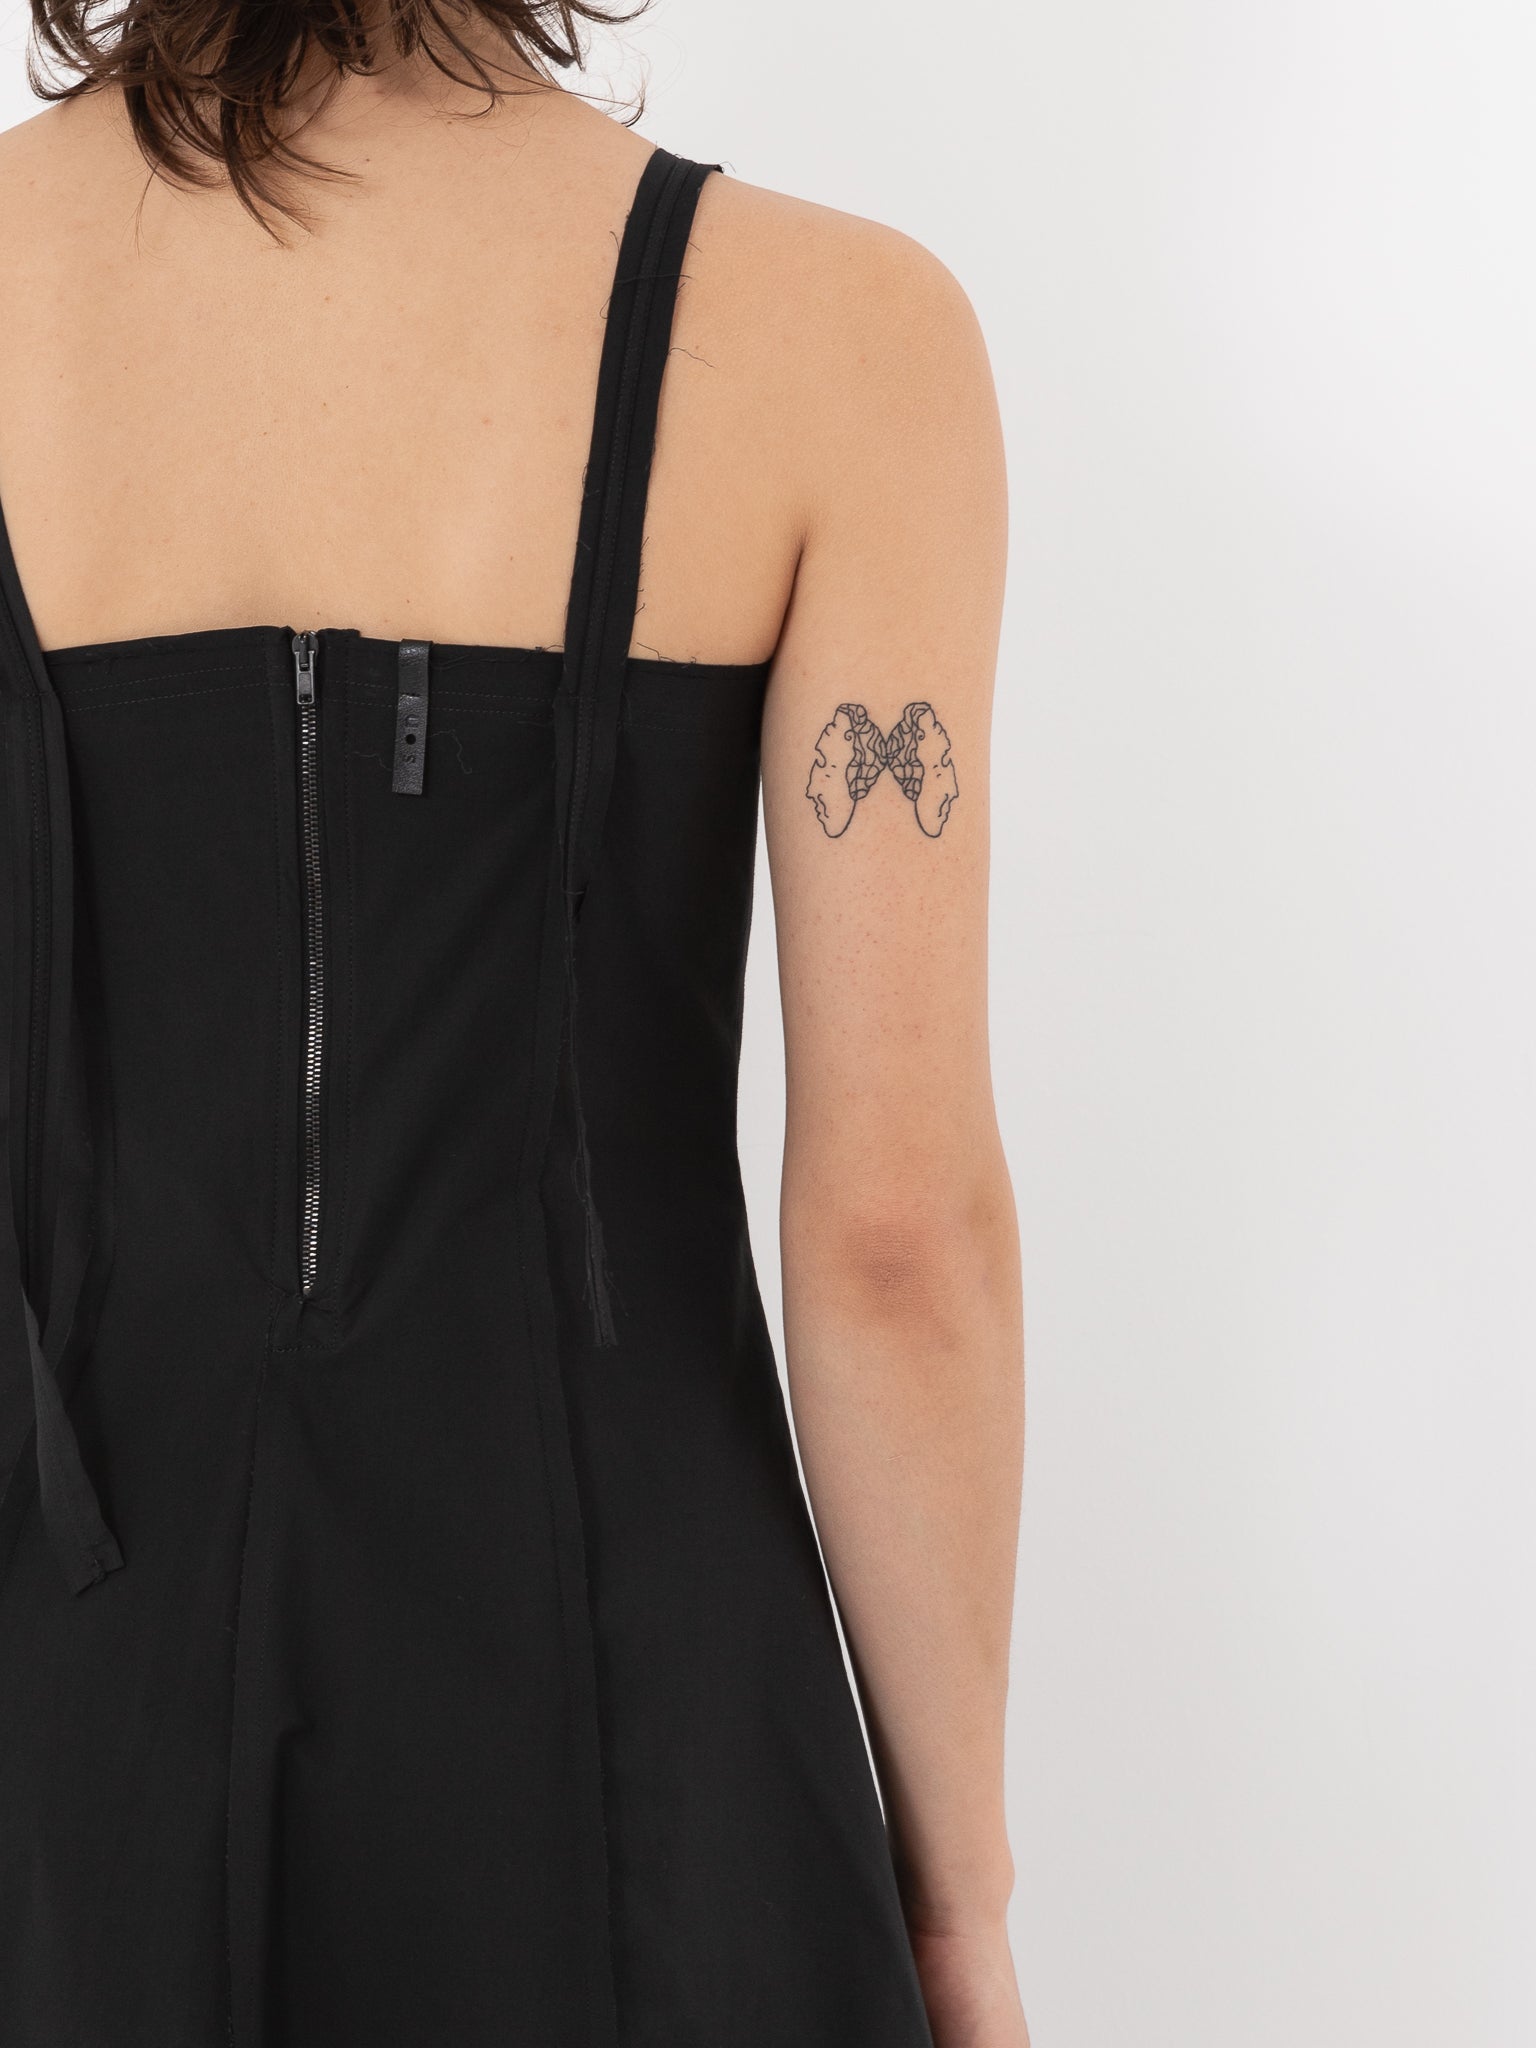 Serie Numerica Dress, Black - Worthwhile, Inc.